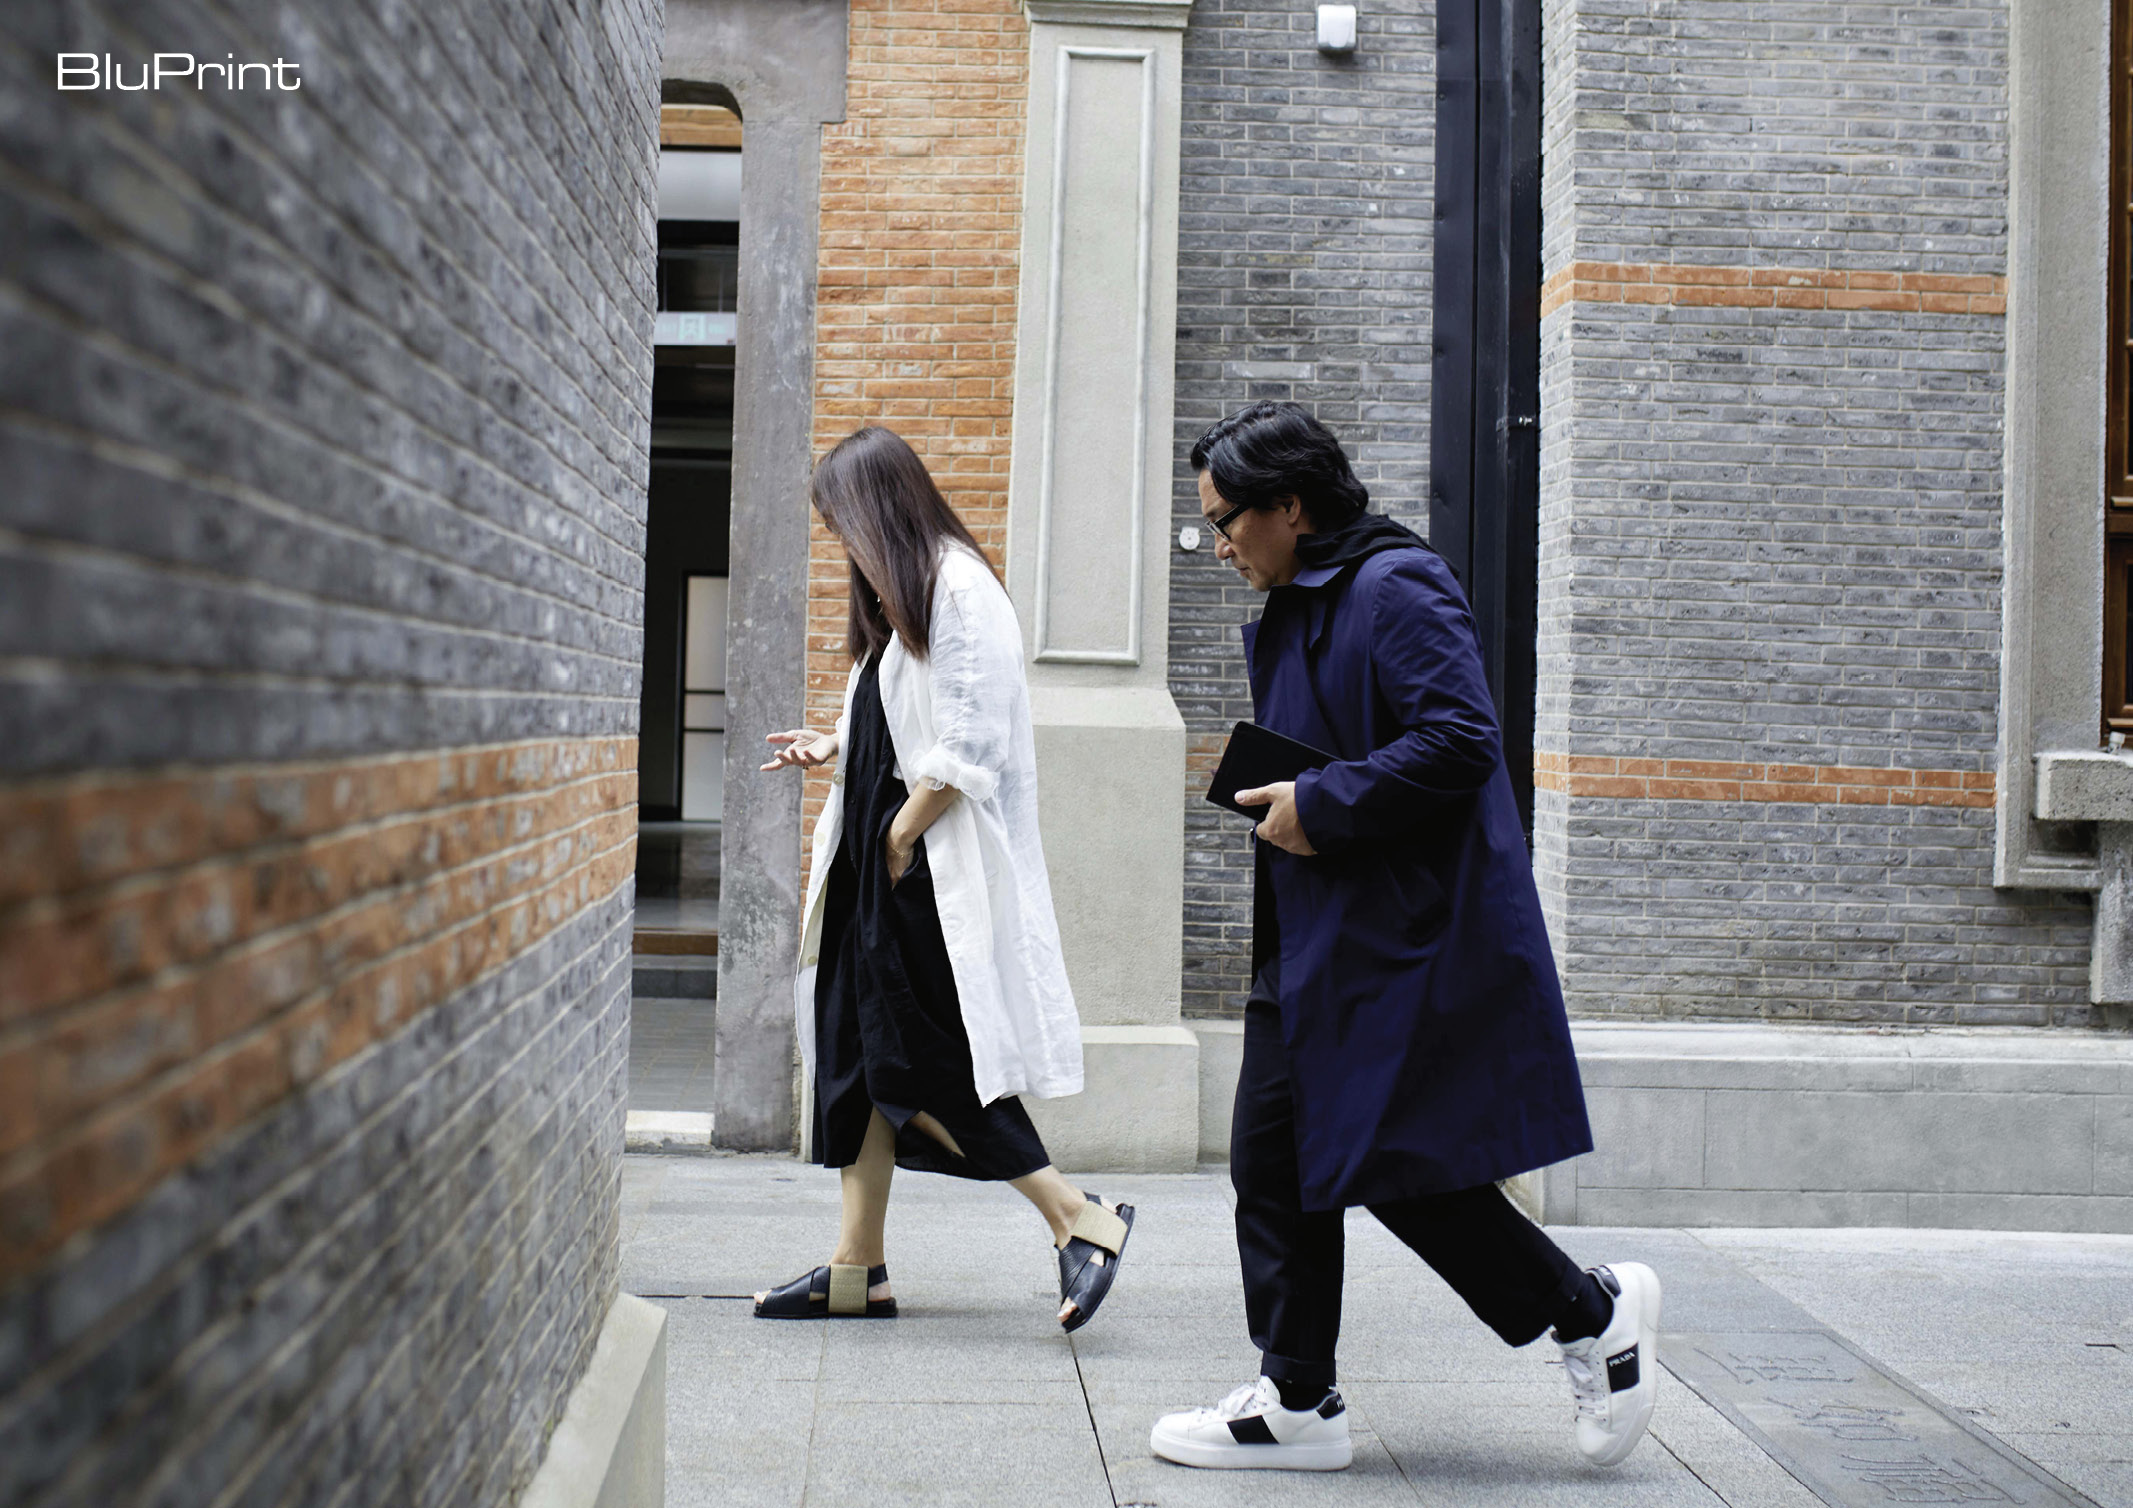 Lyndon Neri and Rossana Hu Shanghai Architect